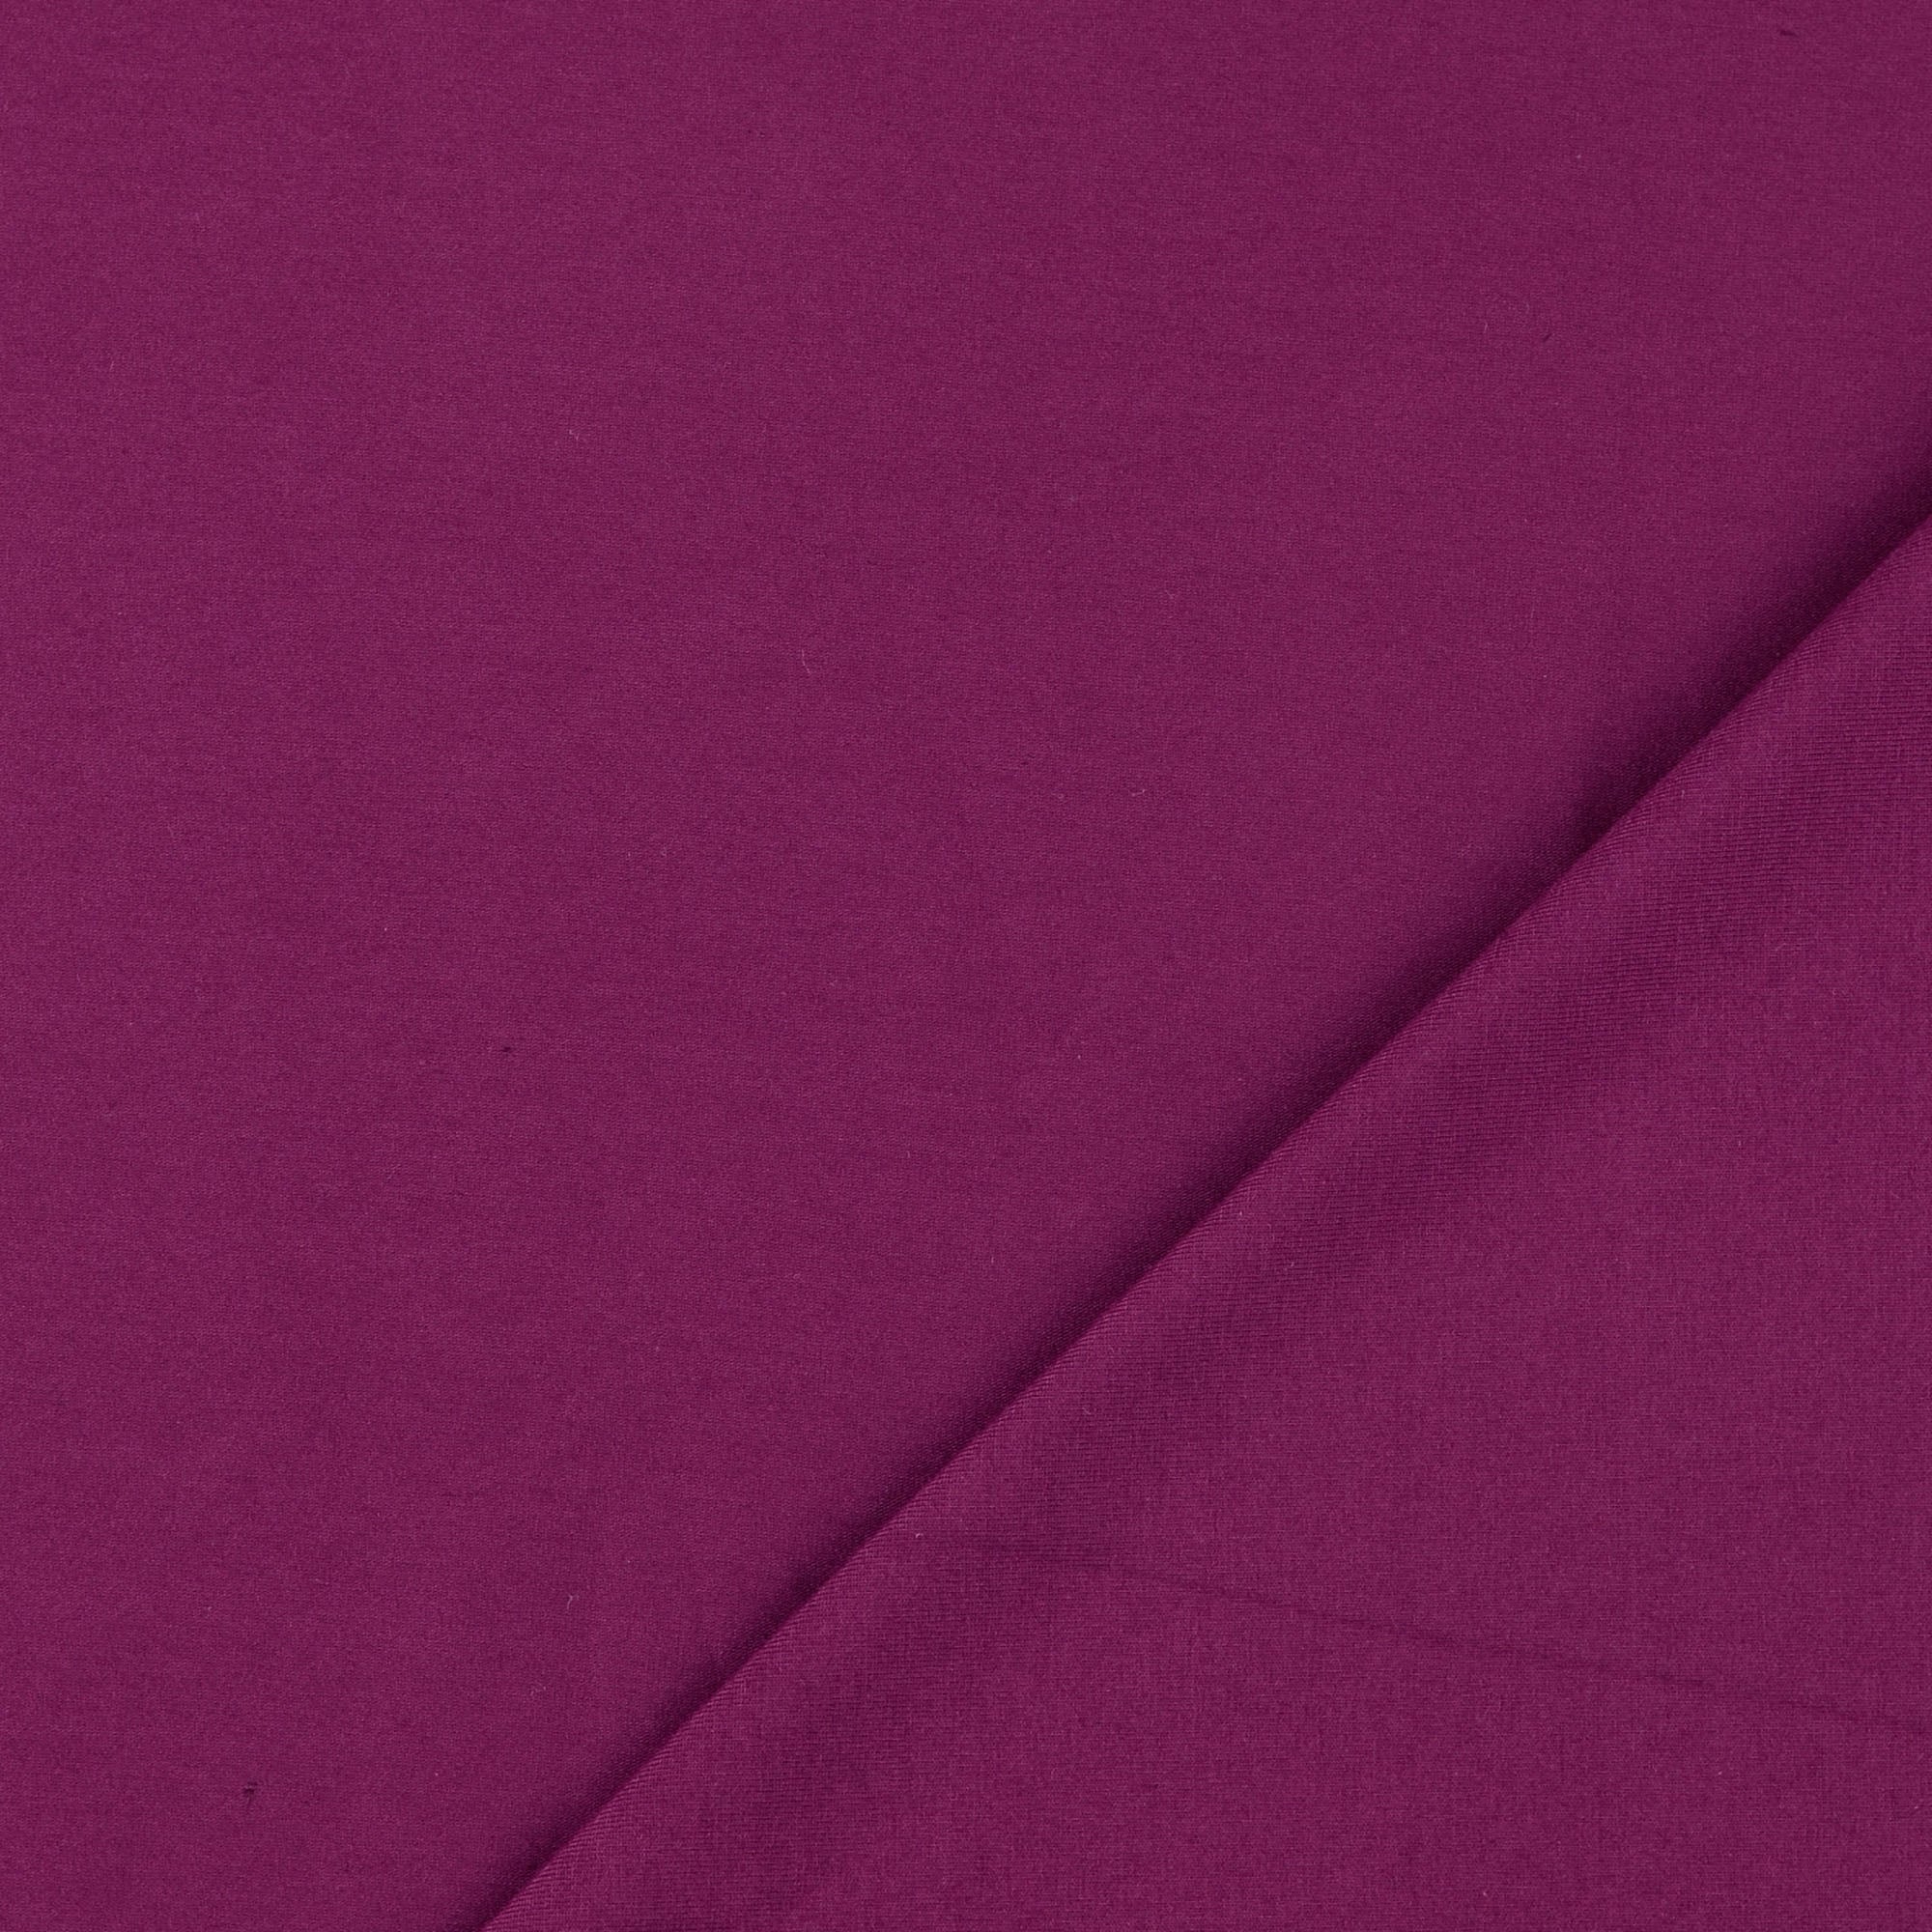 Essential Chic Deep Magenta Cotton Jersey Fabric